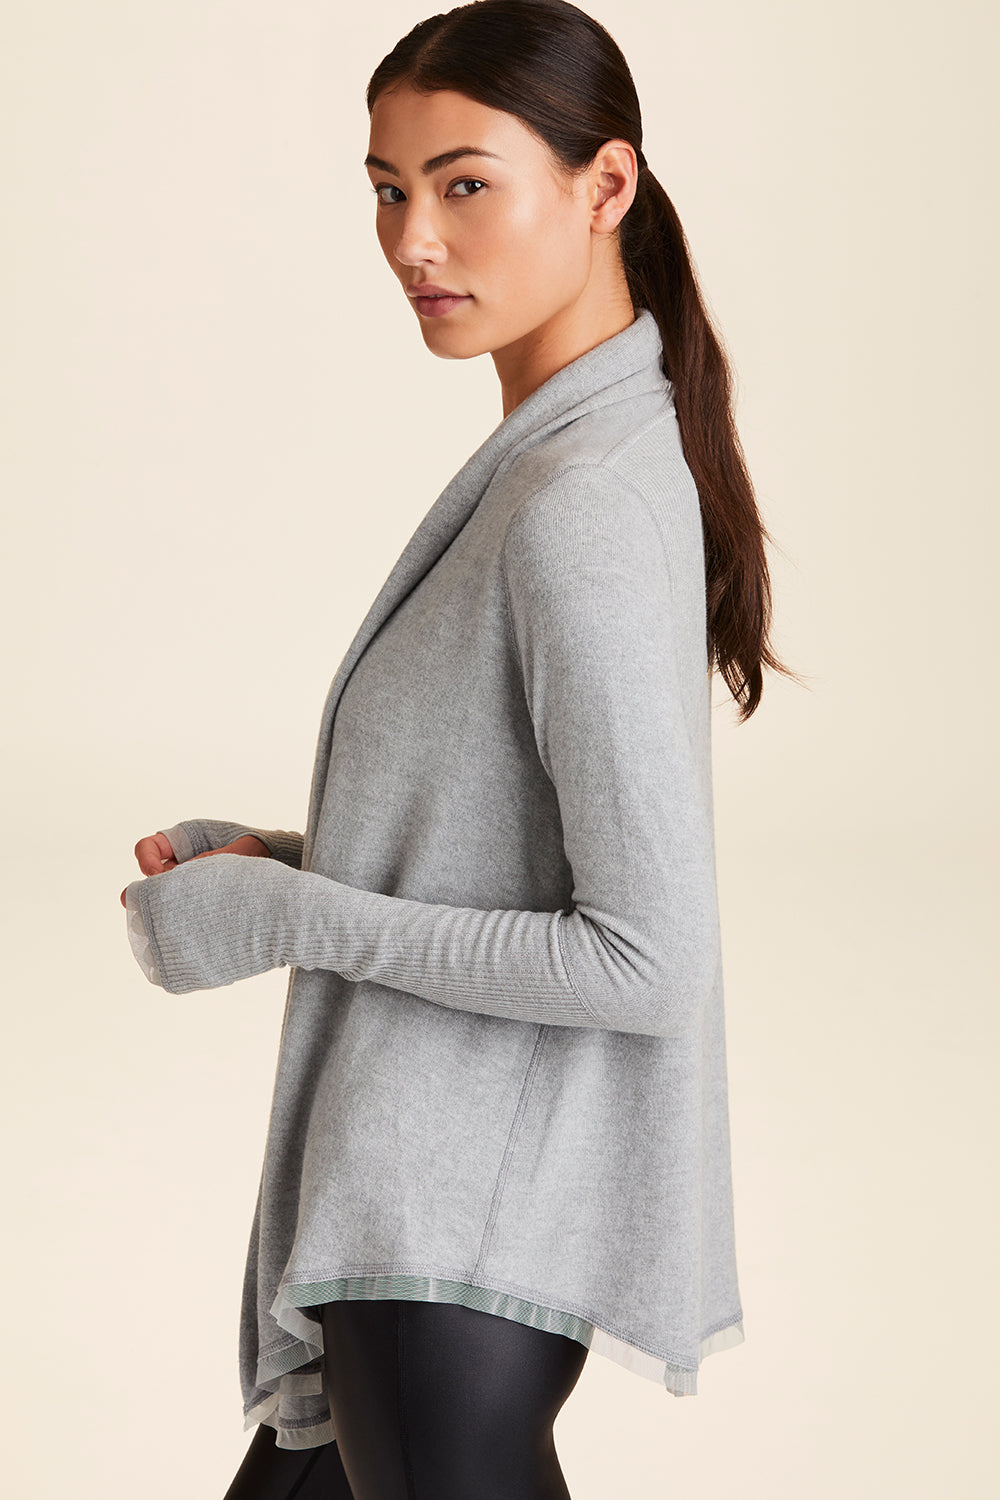 Side view of Alala Women's Luxury Athleisure grey super-soft cardigan